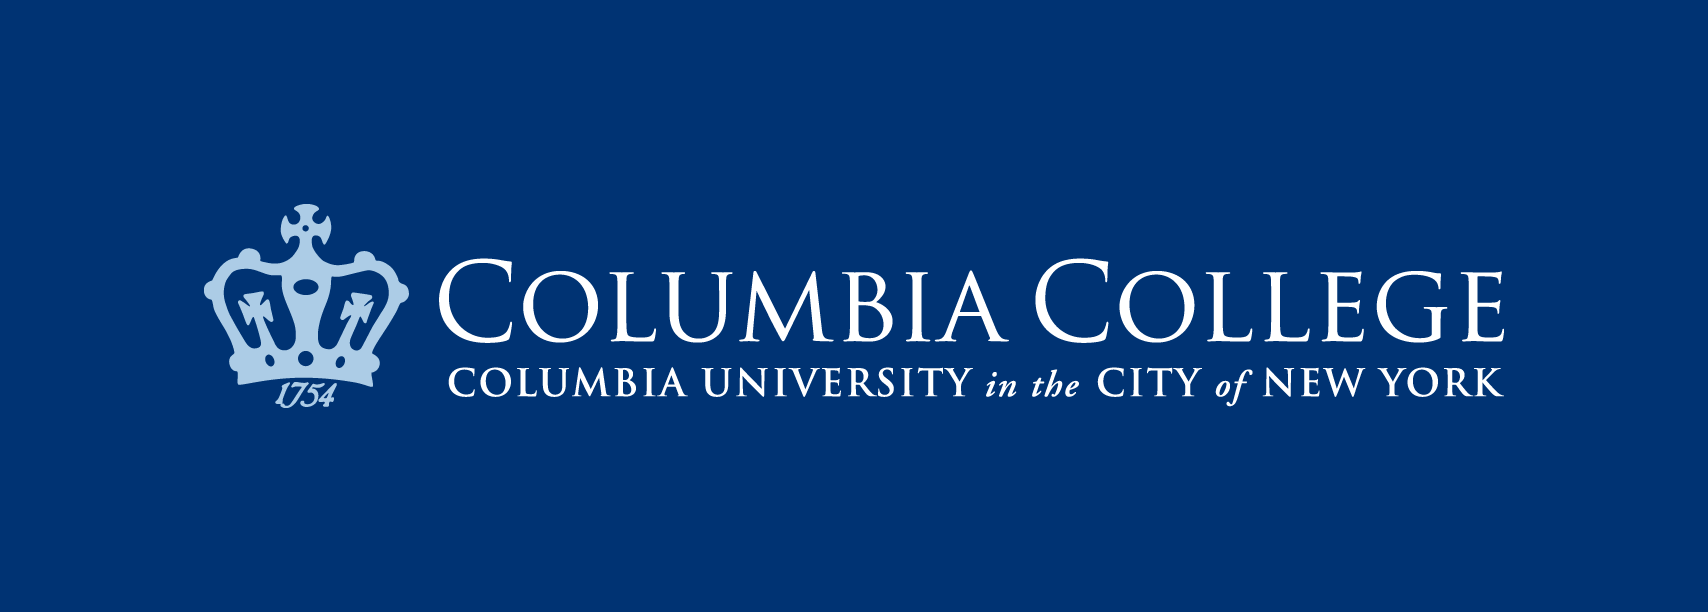 Columbia College Columbia University in the city of New York Schools for Veterans